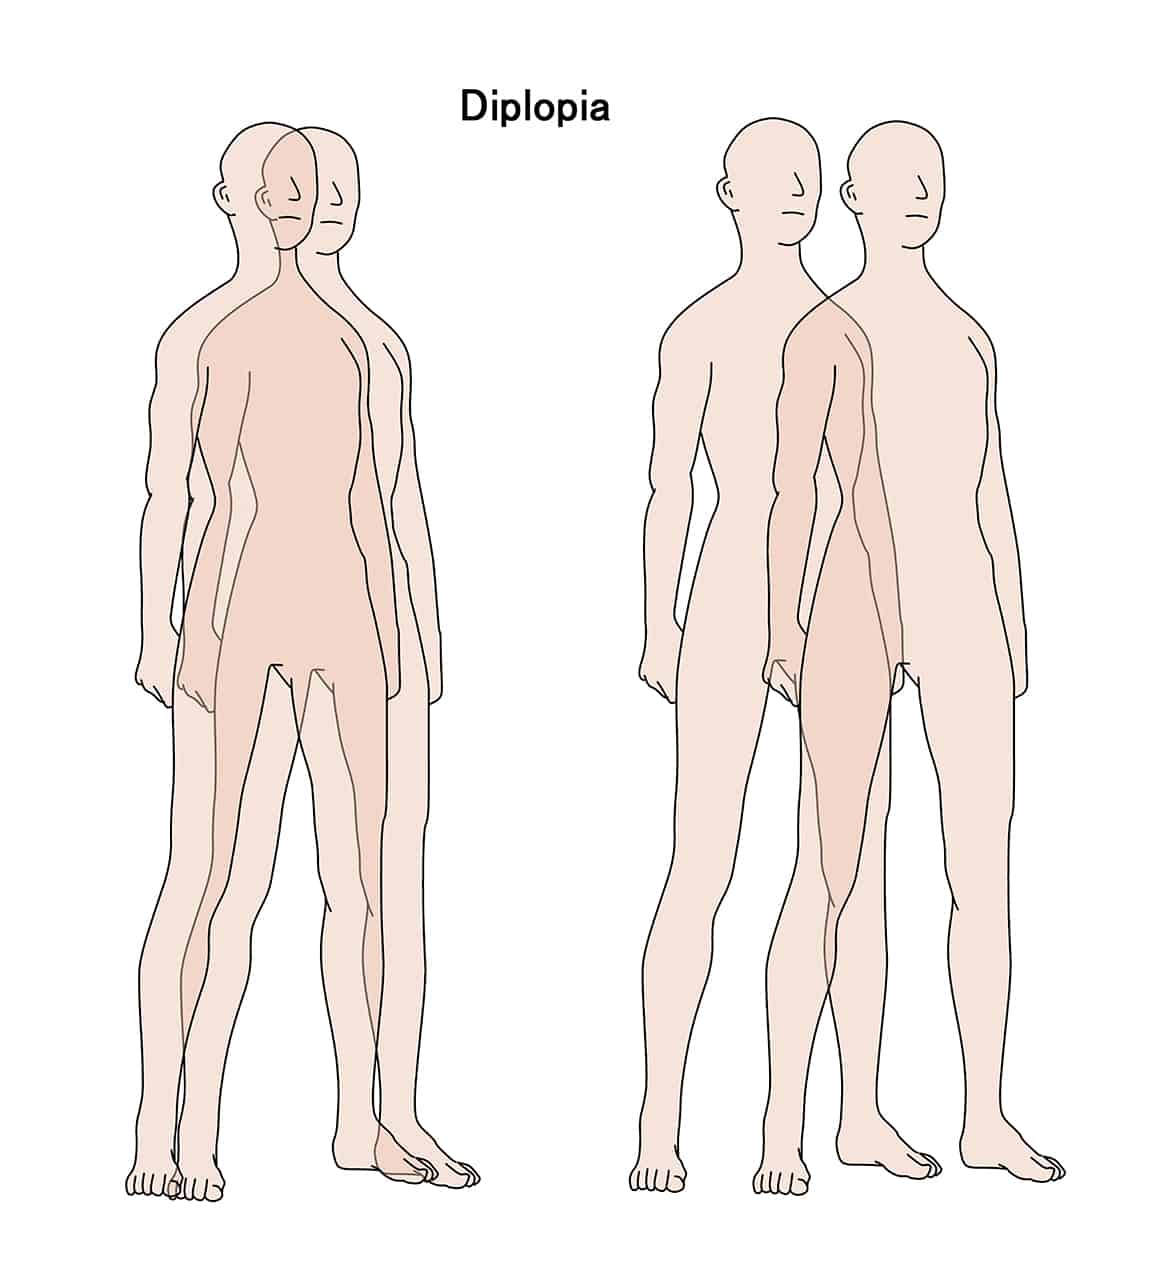 Double Vision Diplopia